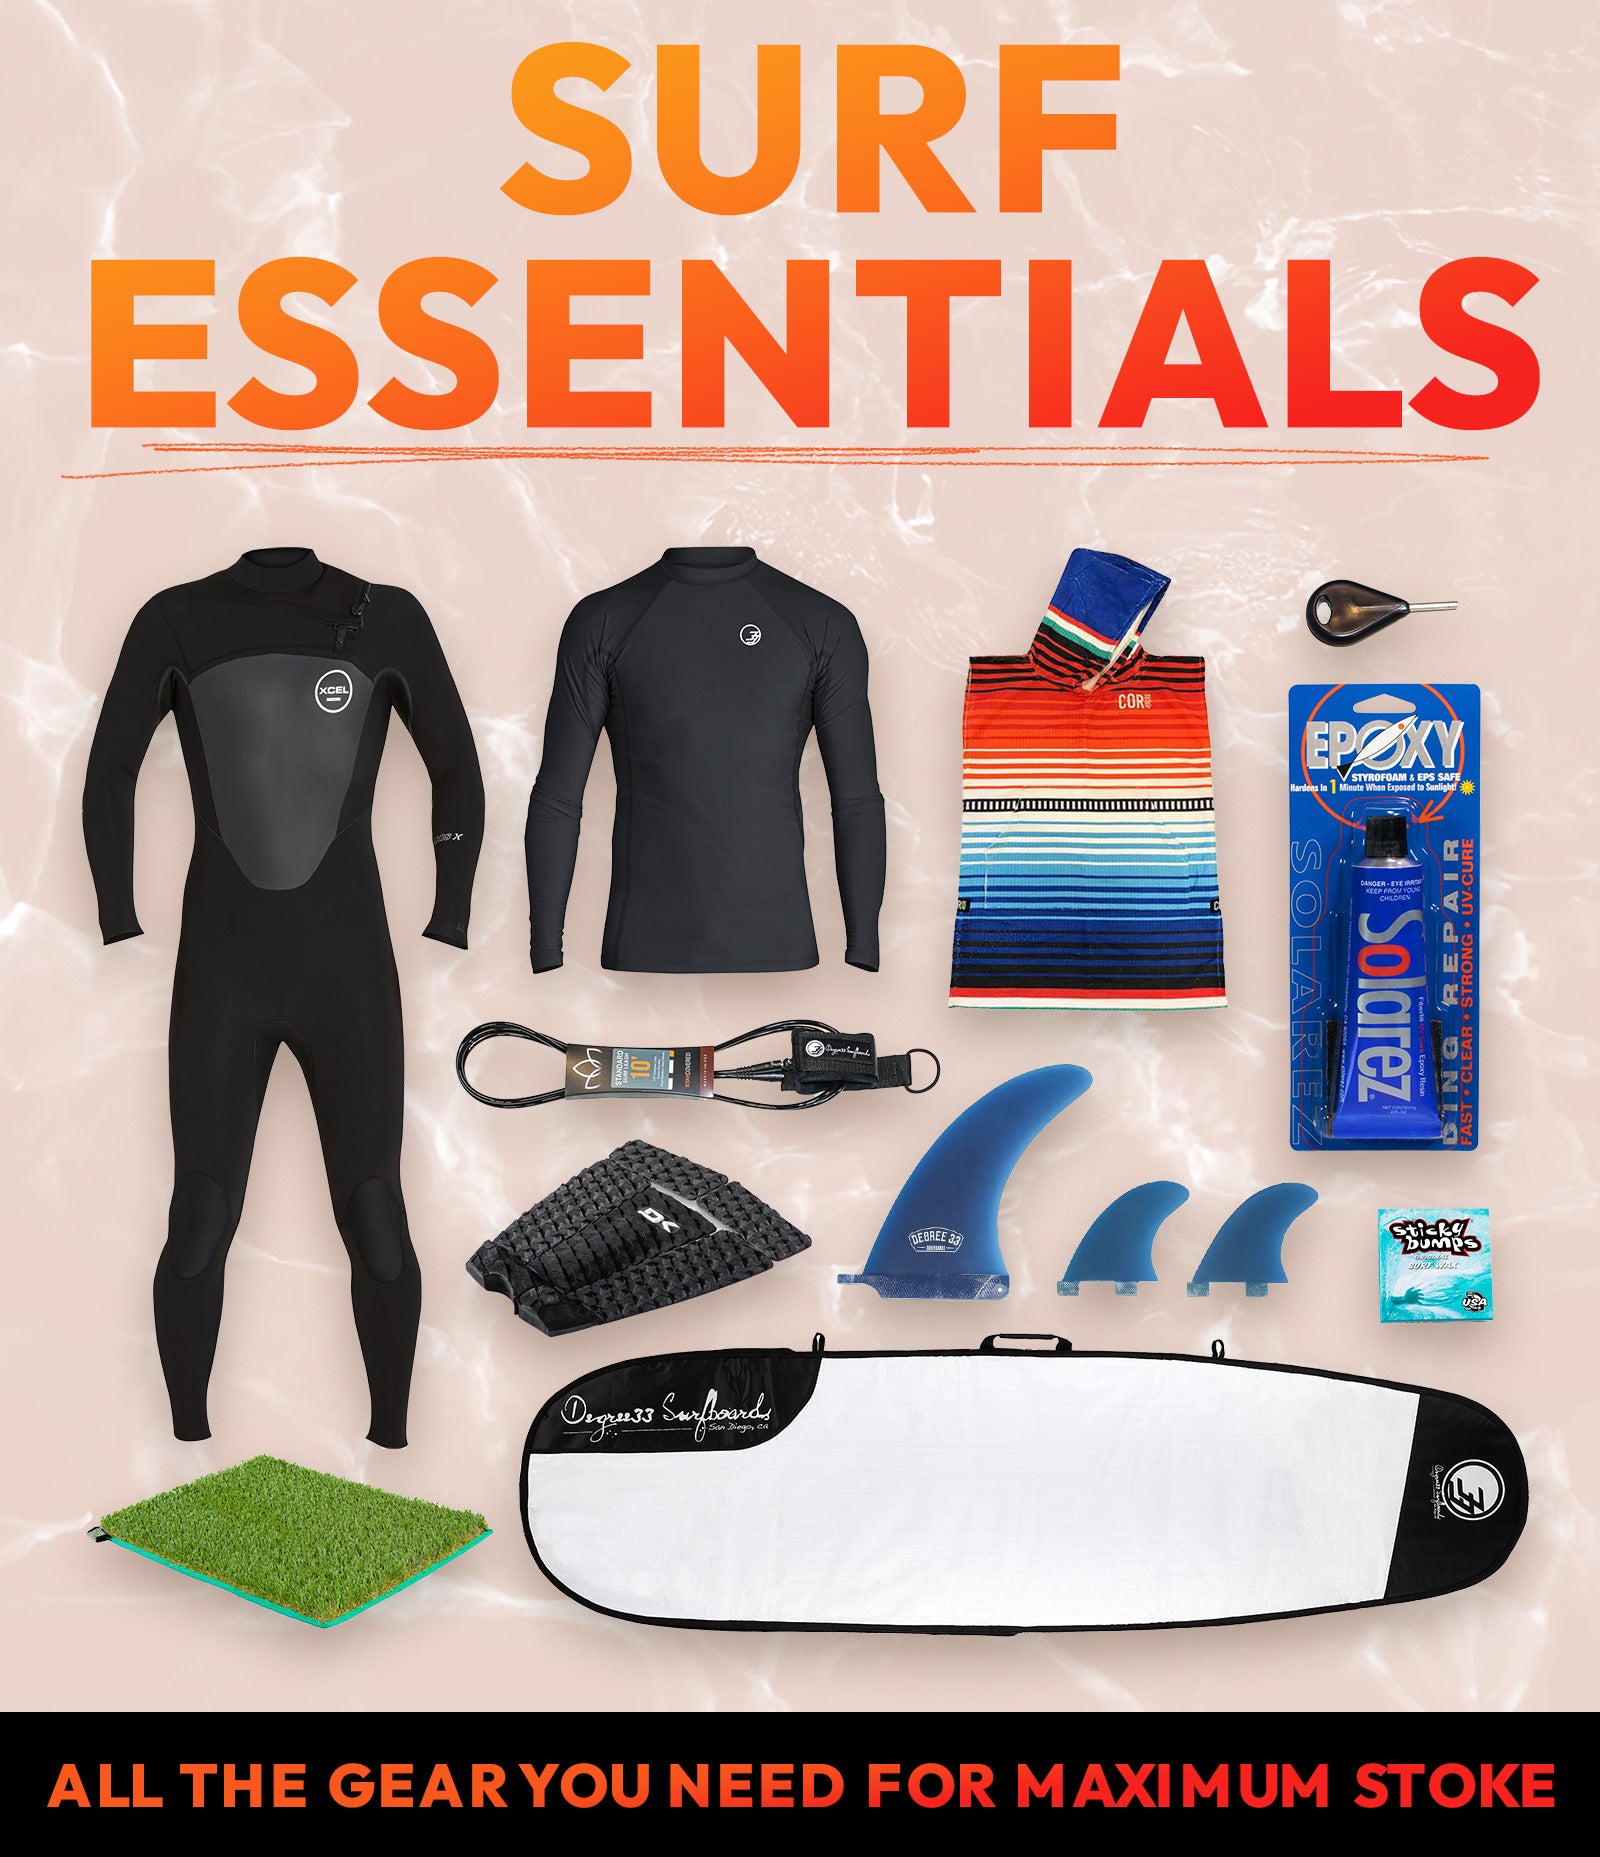 Essential Surfboard Accessories - Degree 33 Surfboards